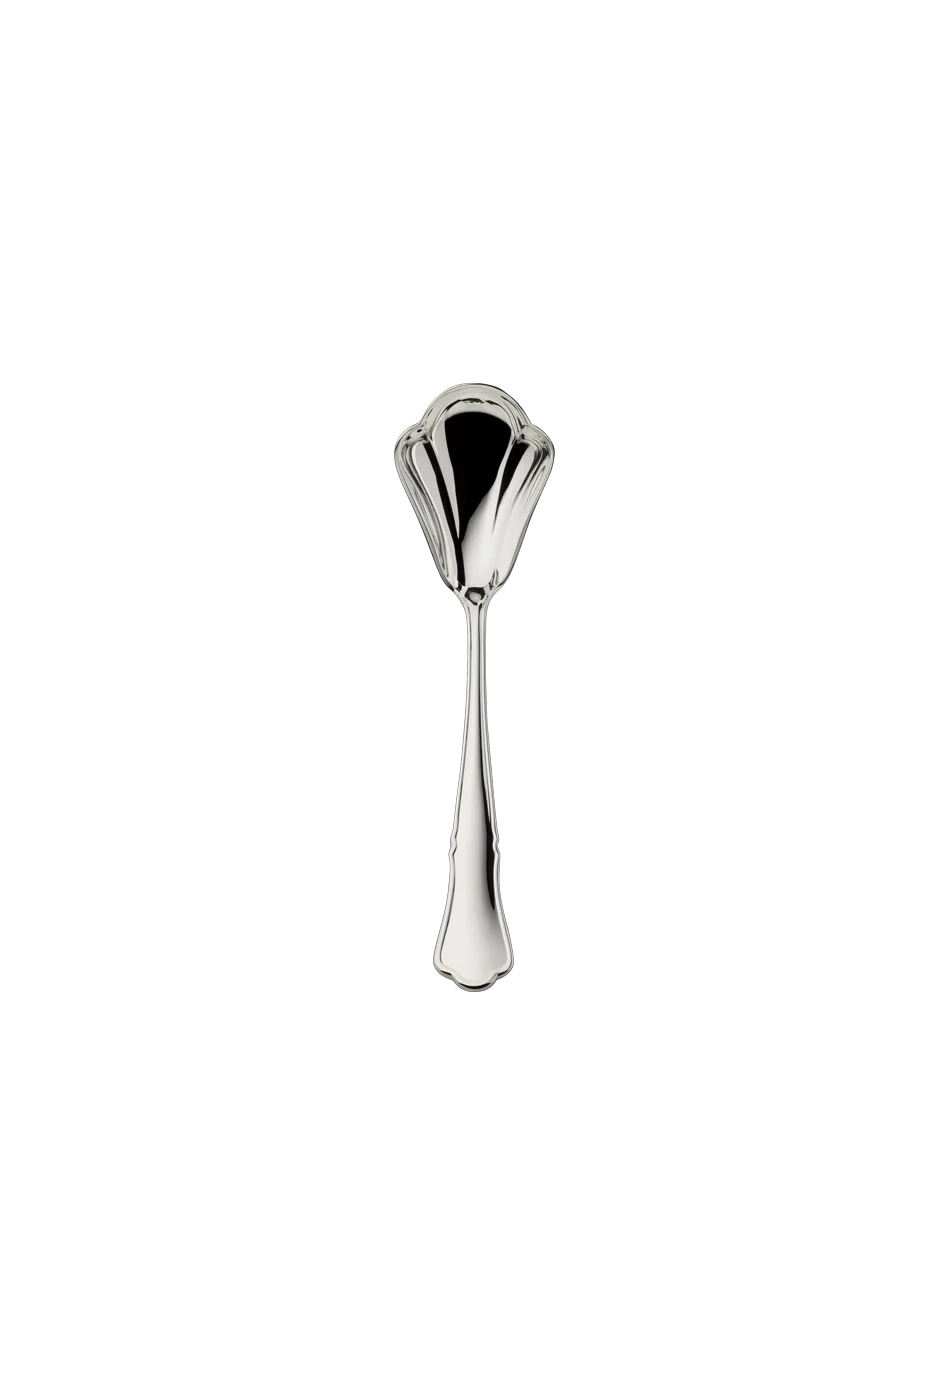 Alt-Chippendale Sugar Spoon (150g massive silverplated)